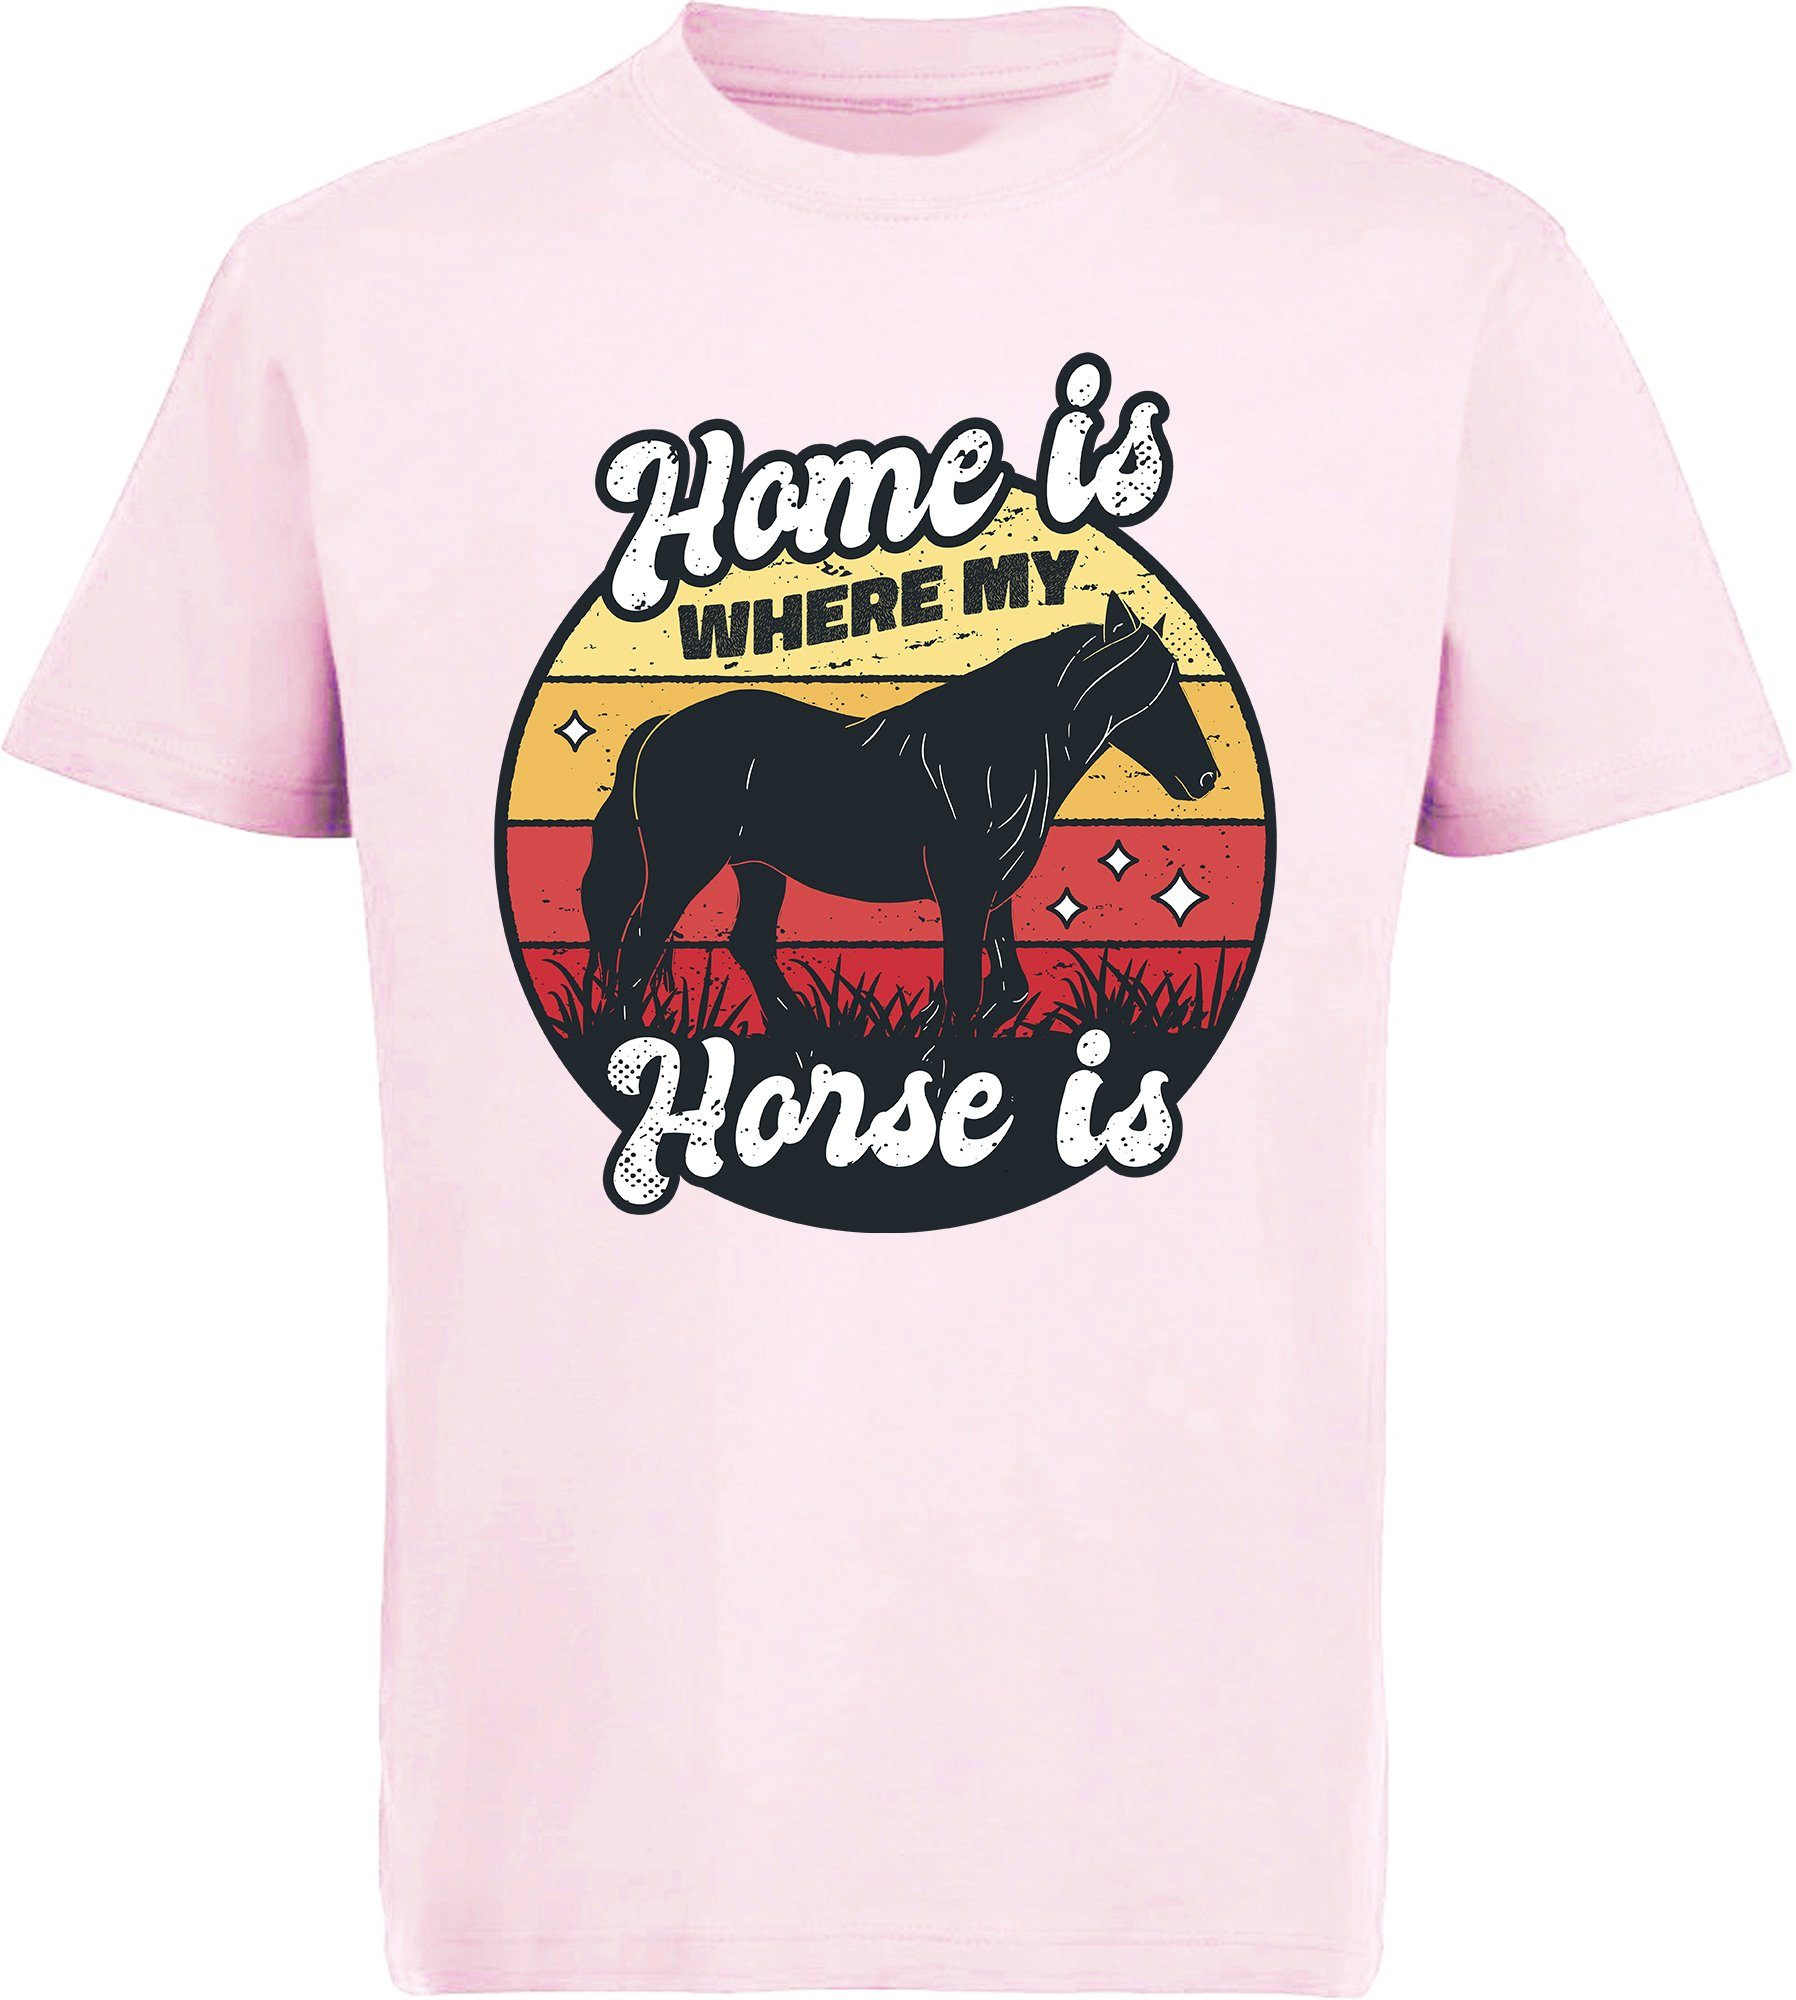 MyDesign24 Print-Shirt bedrucktes Mädchen T-Shirt - Home is where my horse is Baumwollshirt mit Aufdruck, i156 rosa